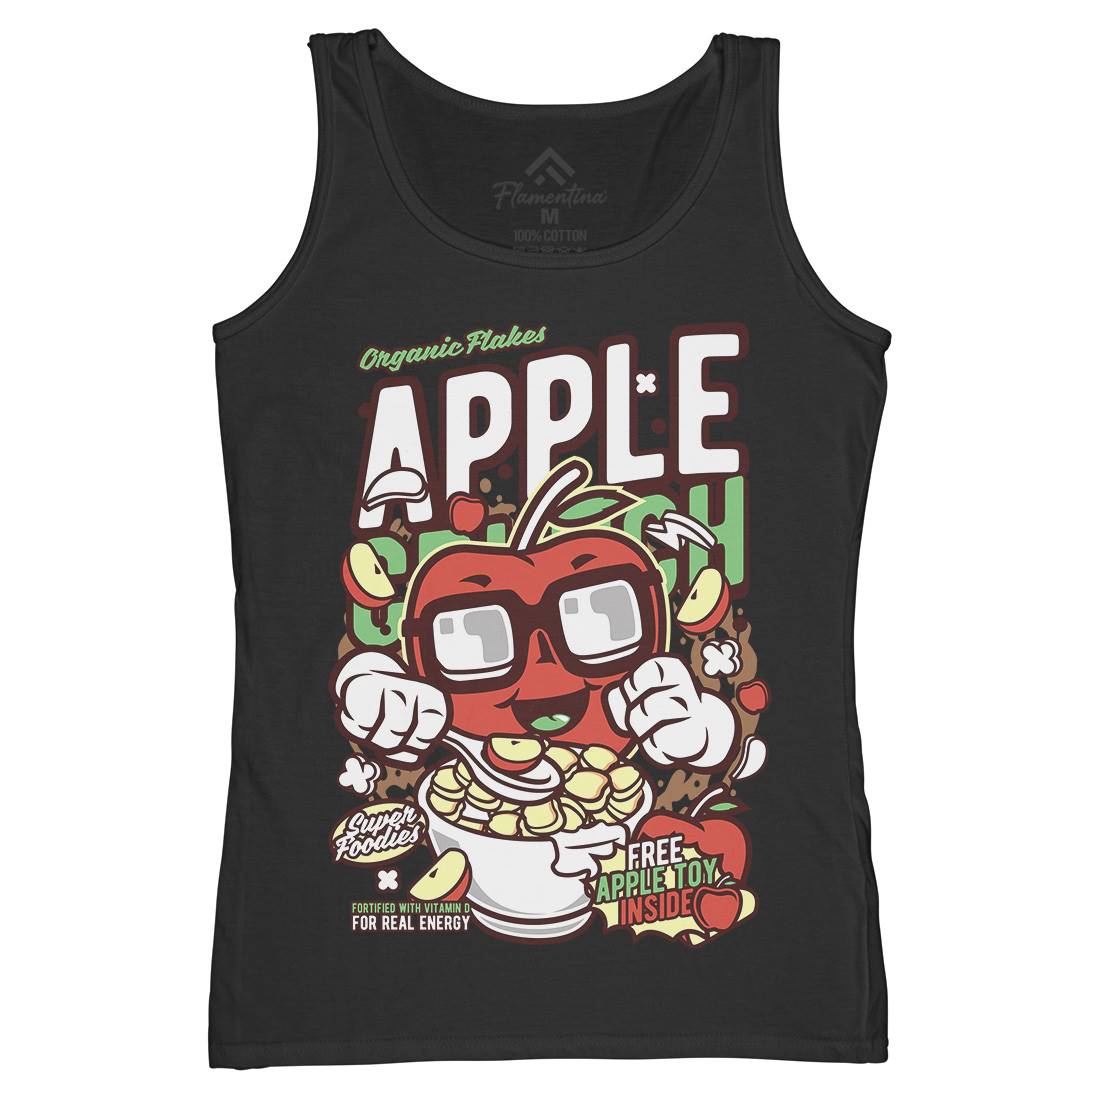 Apple Crunch Womens Organic Tank Top Vest Food C480